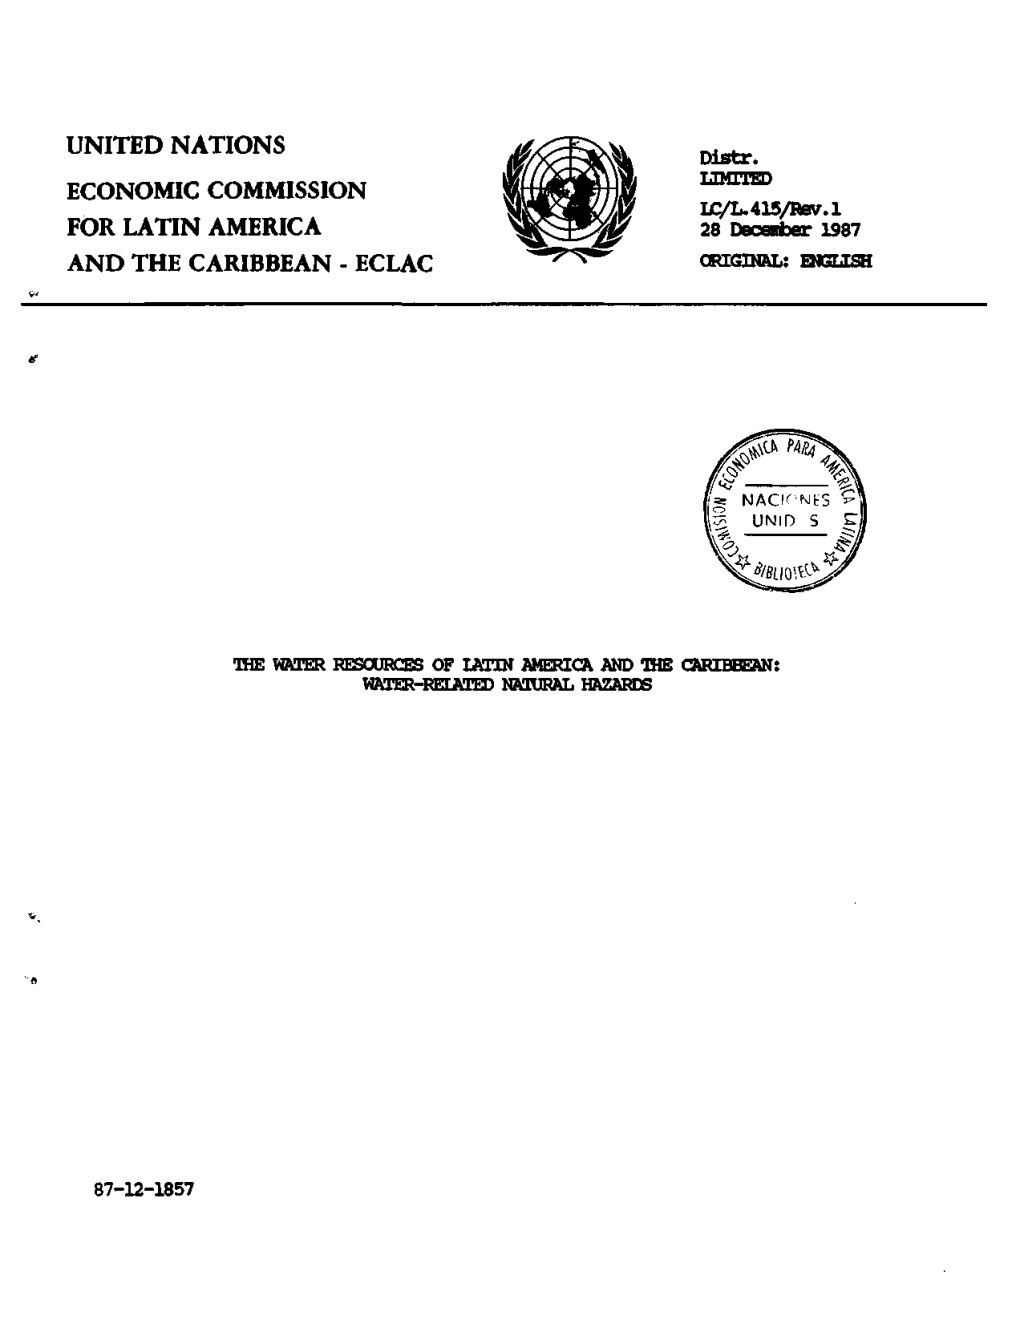 United Nations Economic Commission